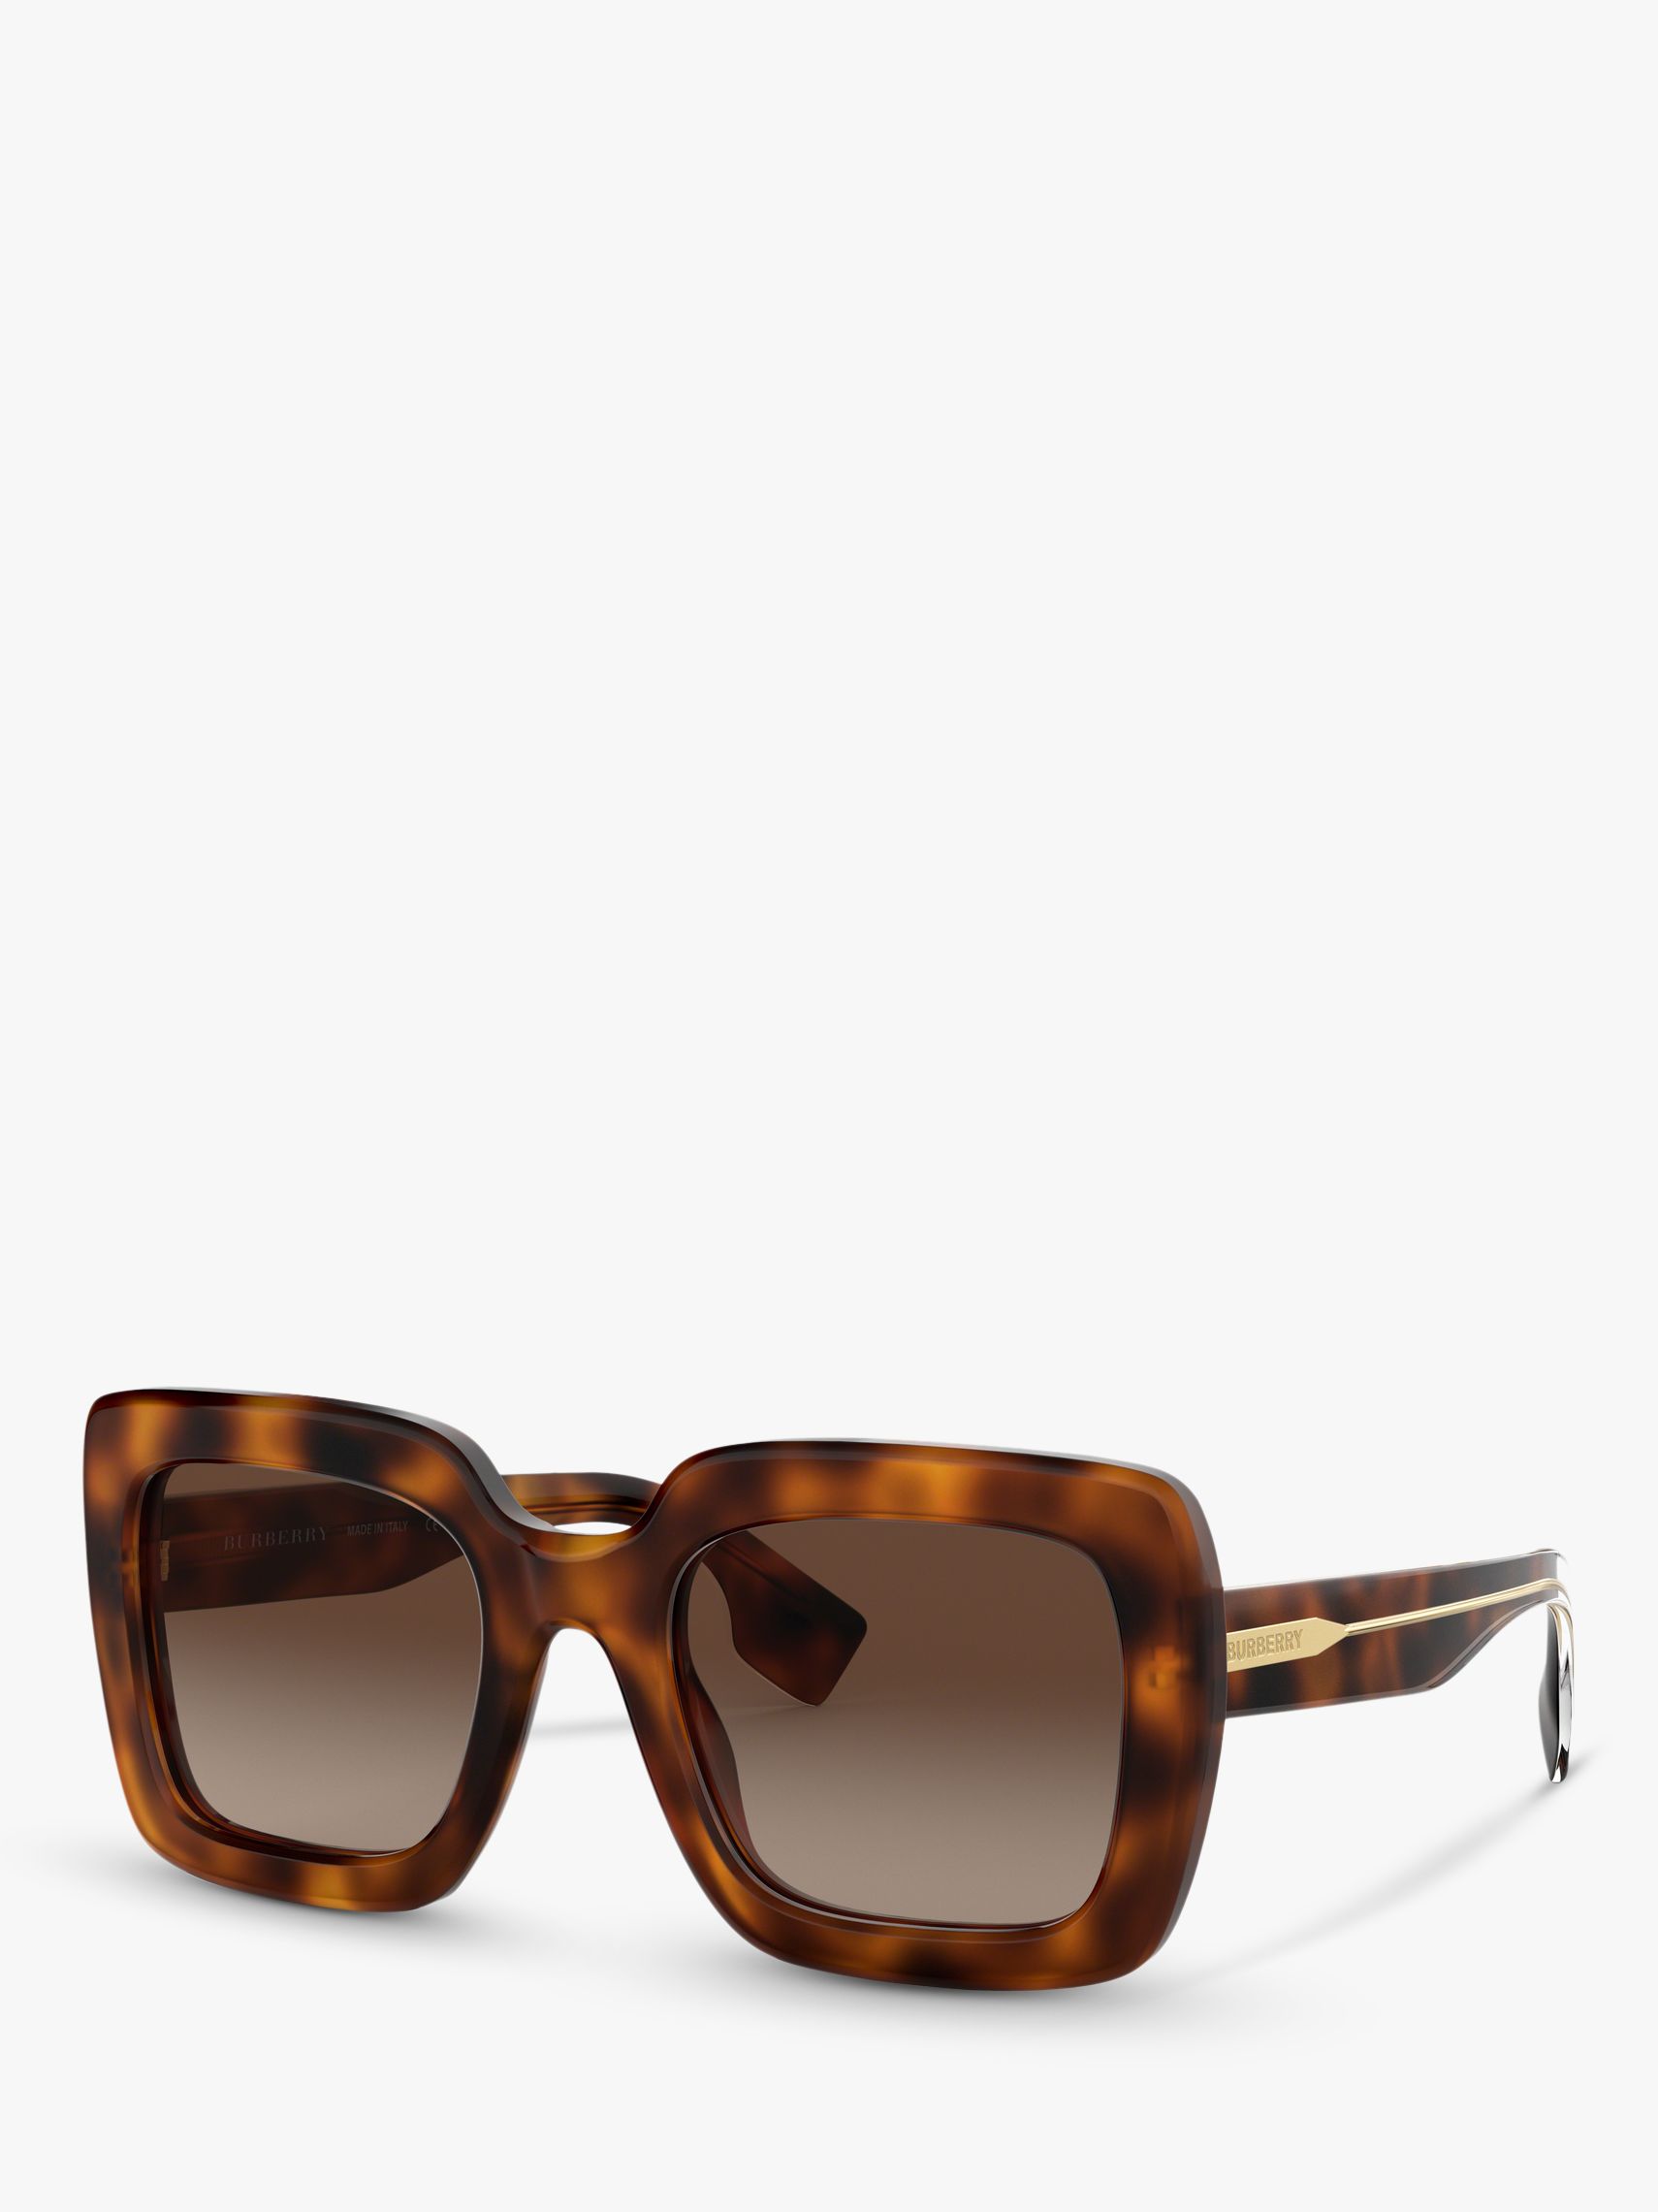 Burberry BE4284 Women's Chunky Square Sunglasses, Havana/Brown Gradient